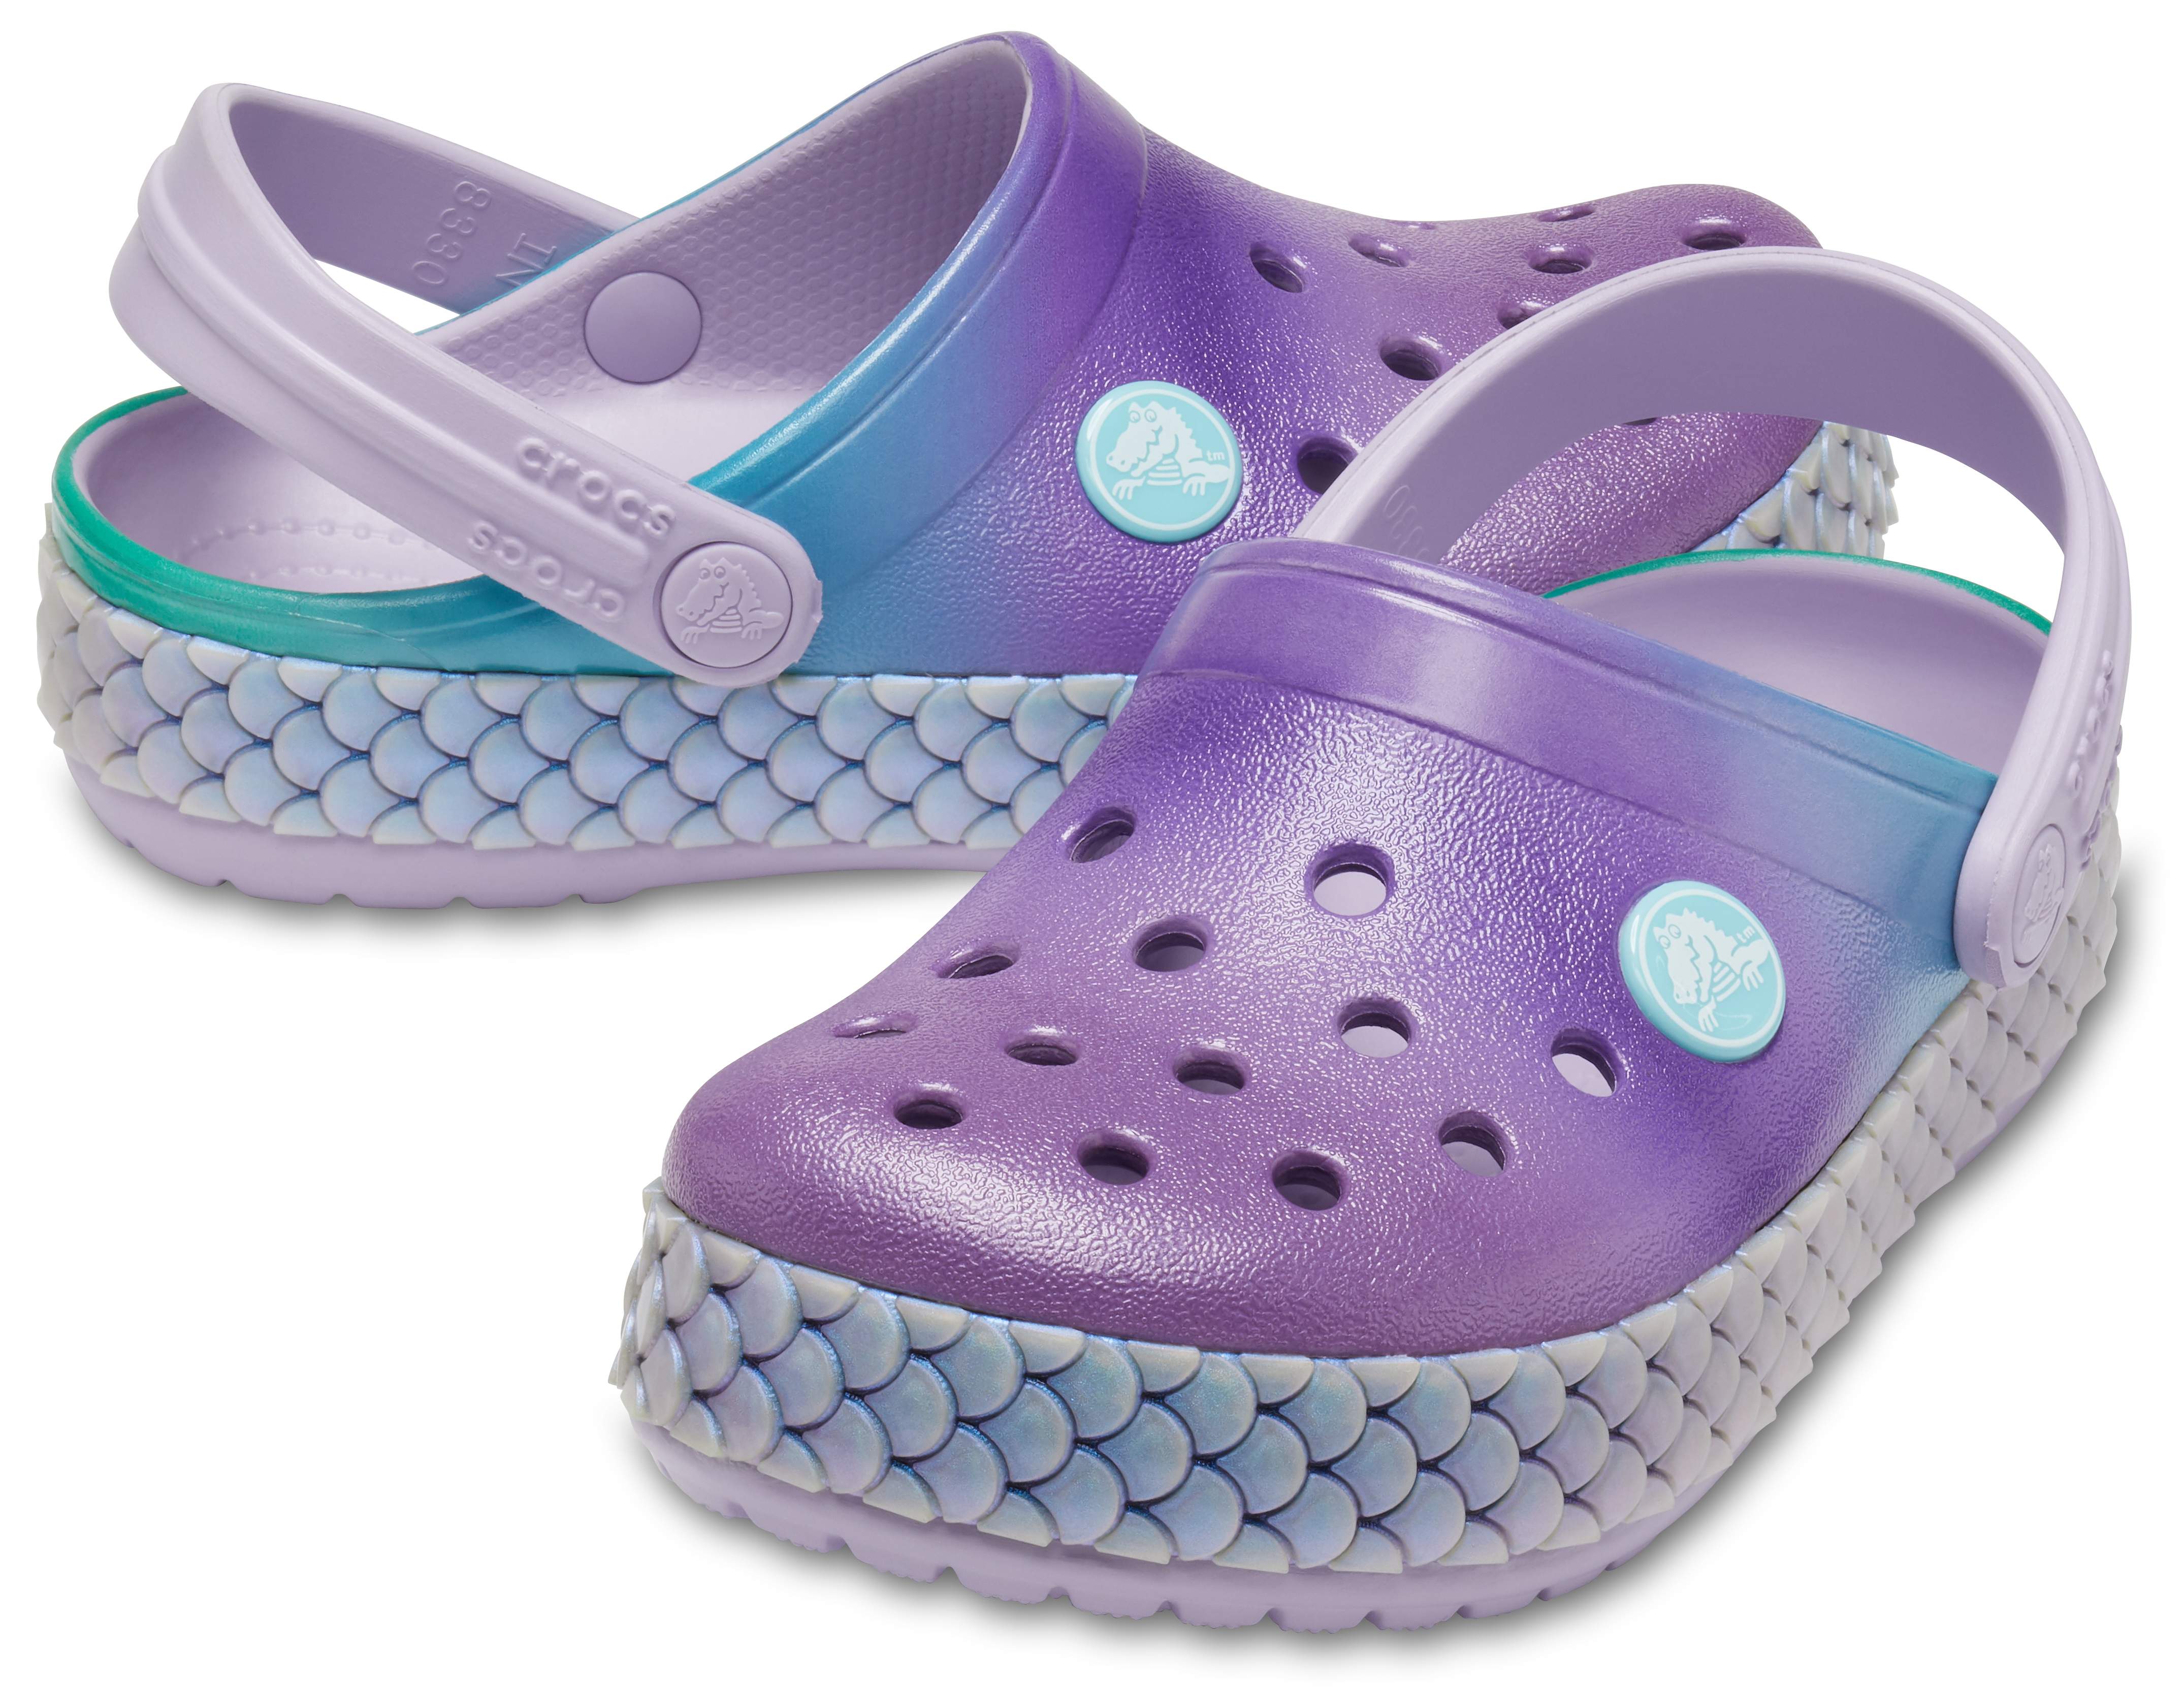 mermaid crocs for toddlers